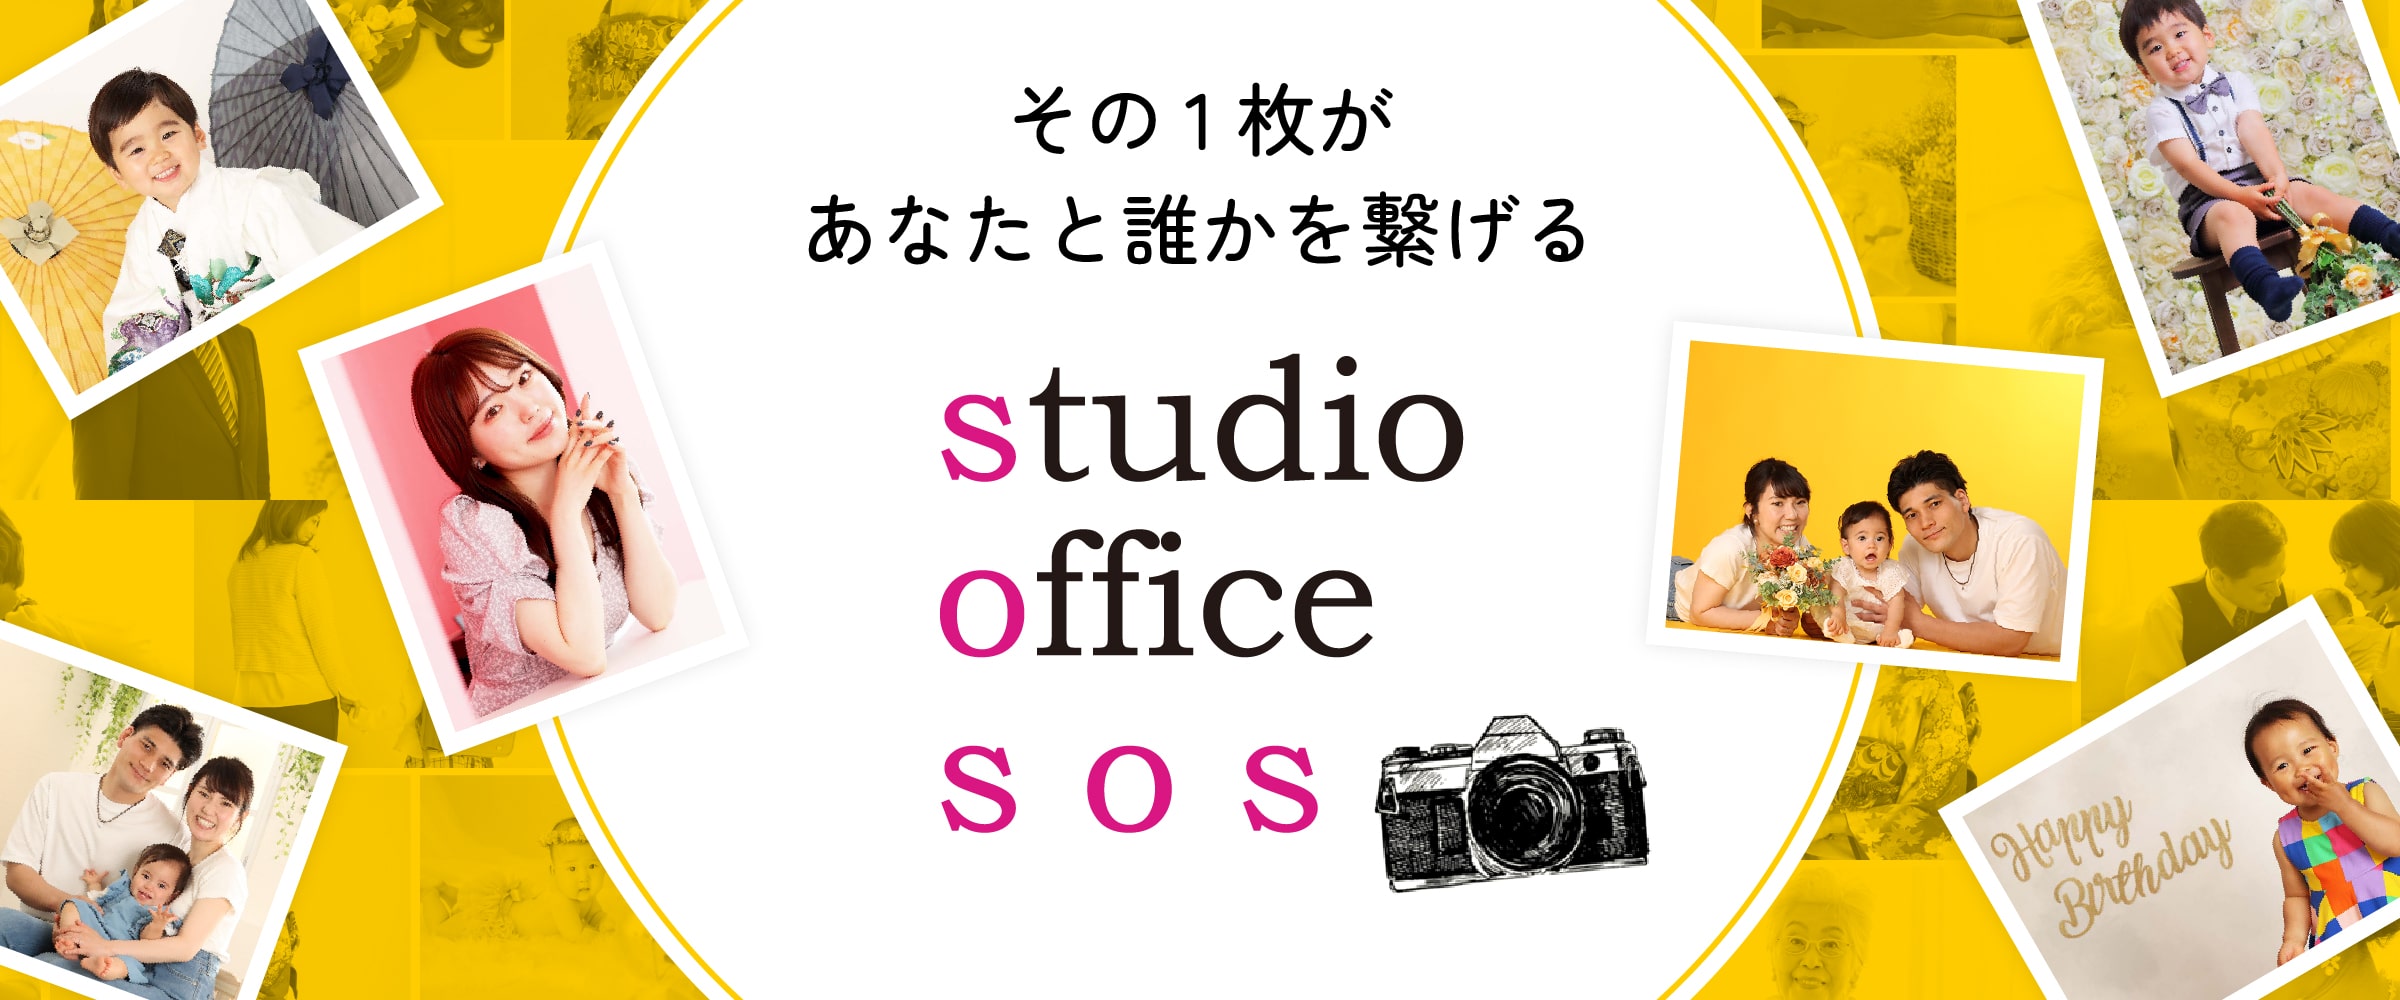 office studio SOS